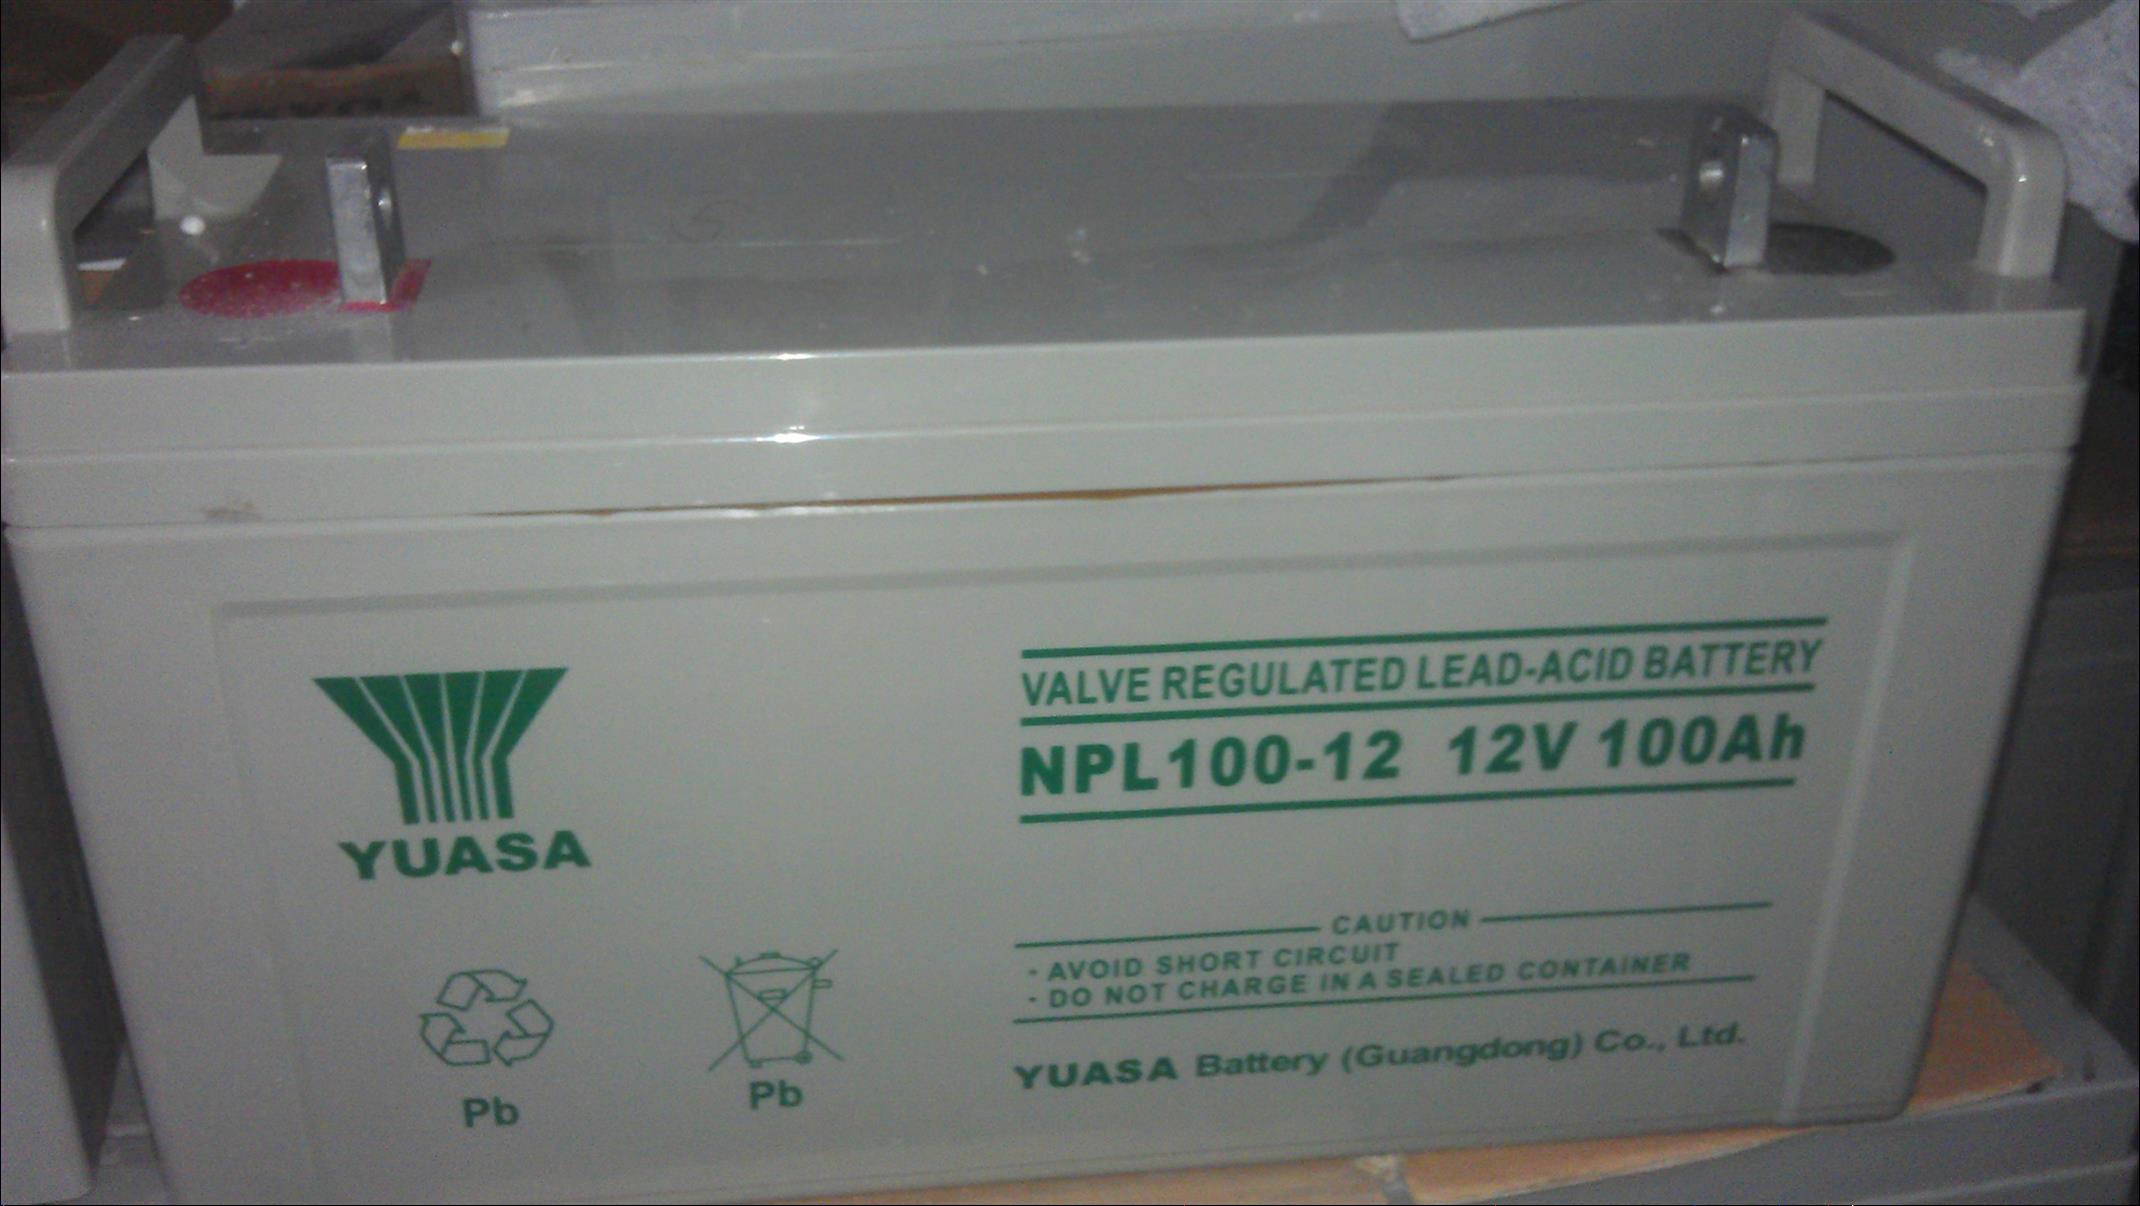 YUASA汤浅蓄电池UXL2200-2N 2V2000AH